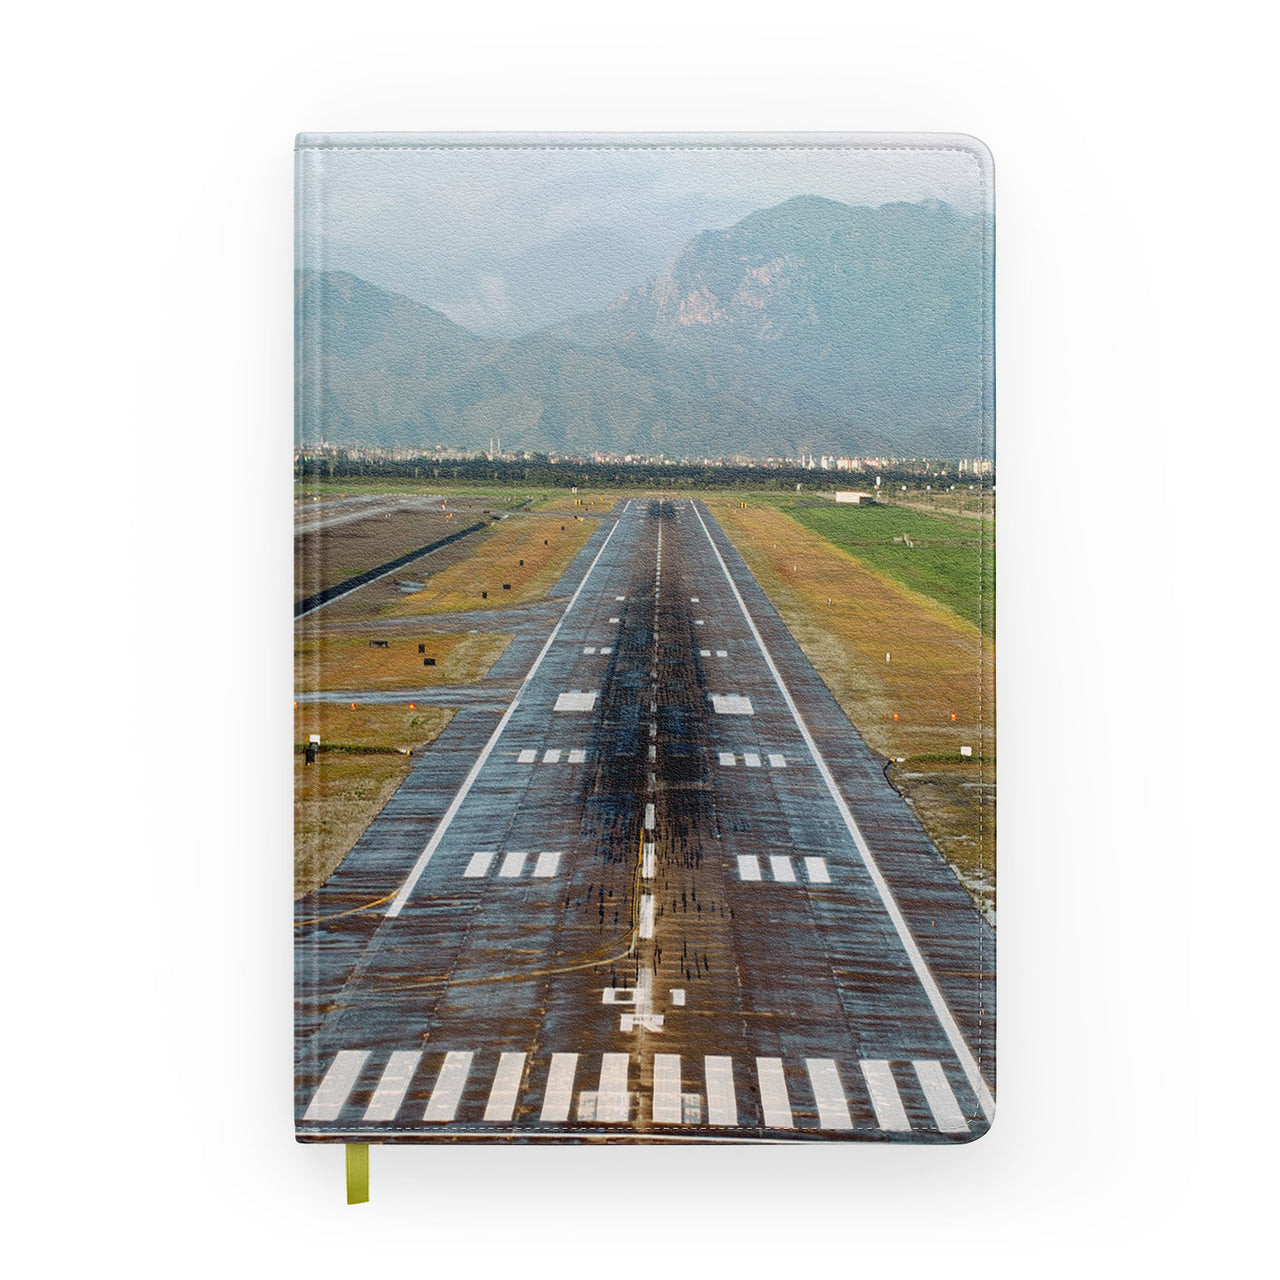 Amazing Mountain View & Runway Designed Notebooks